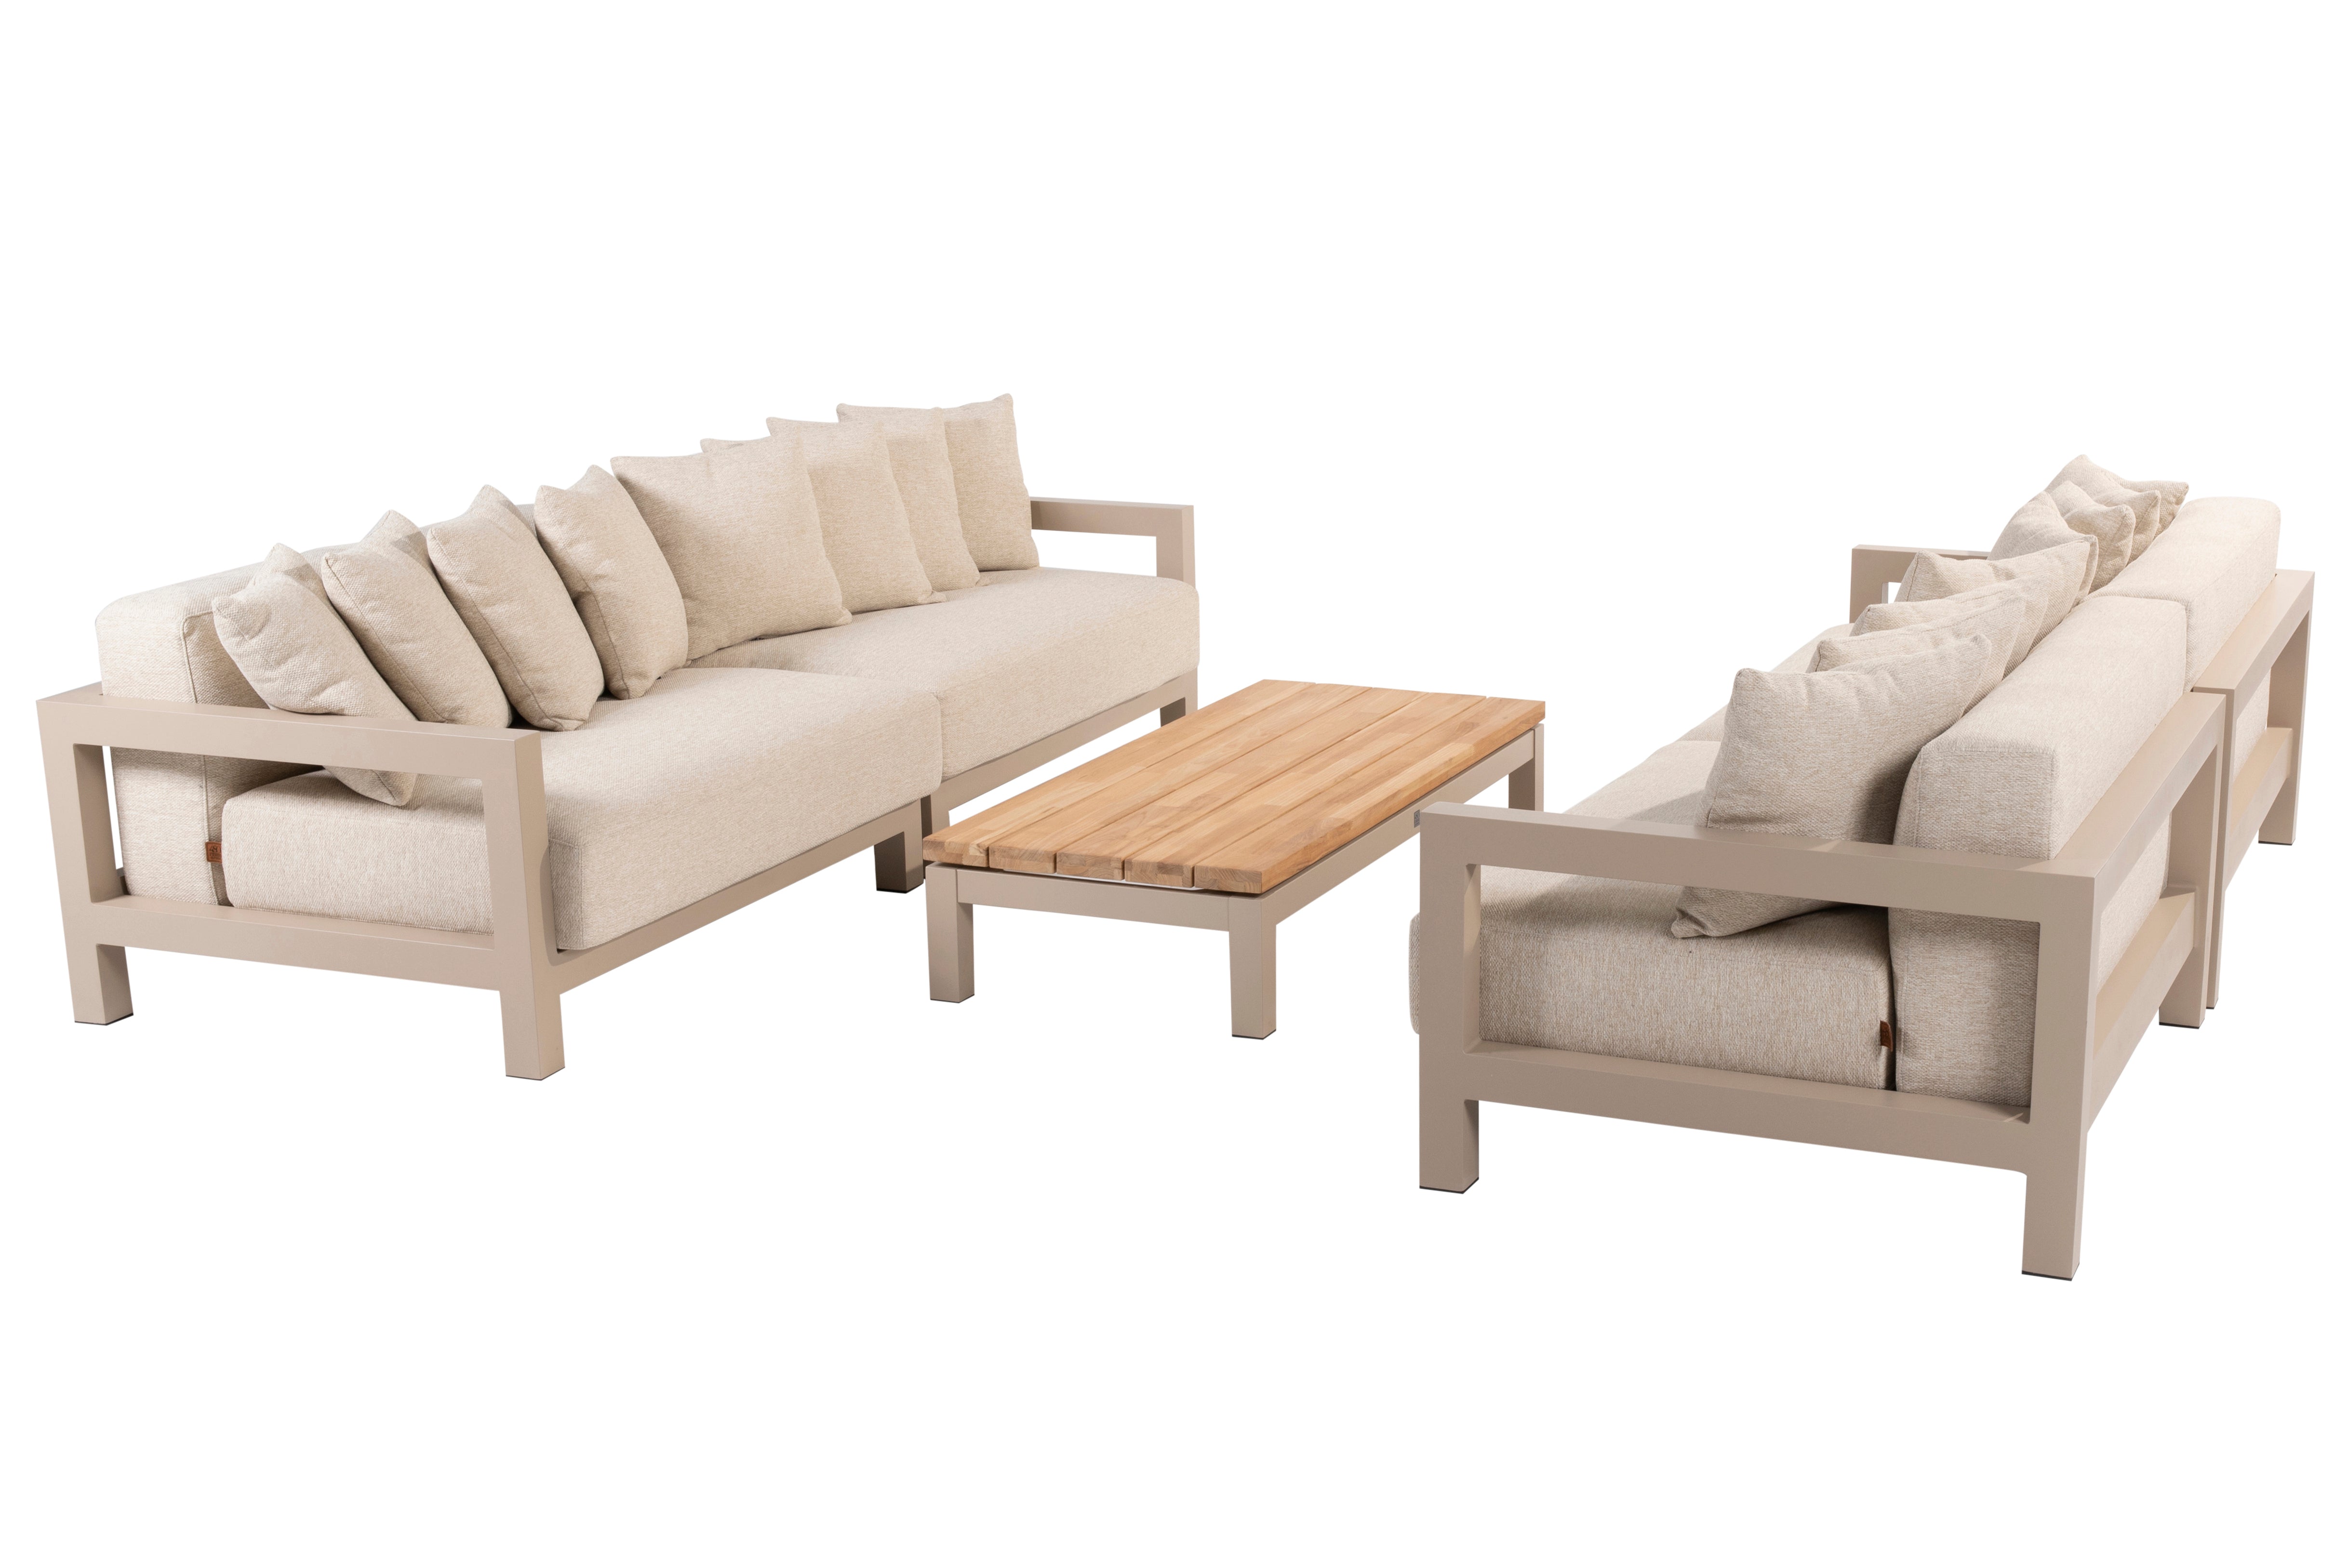 4 Seasons Outdoor Raffinato Large Sofa Set